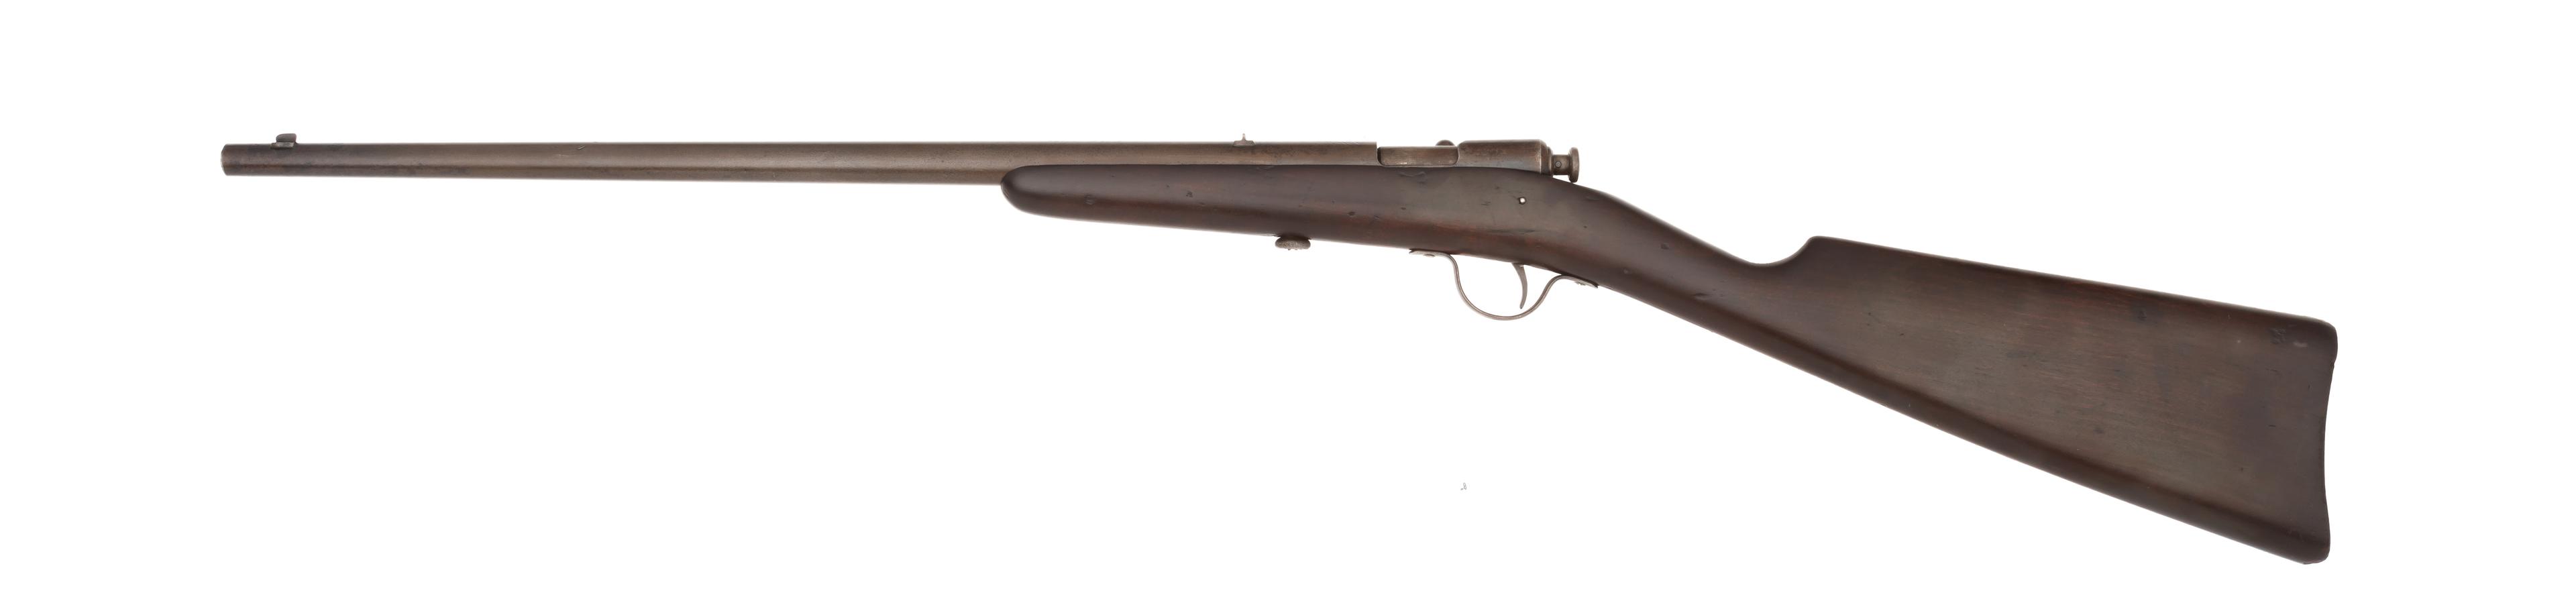 Winchester Model 1900 Rifle